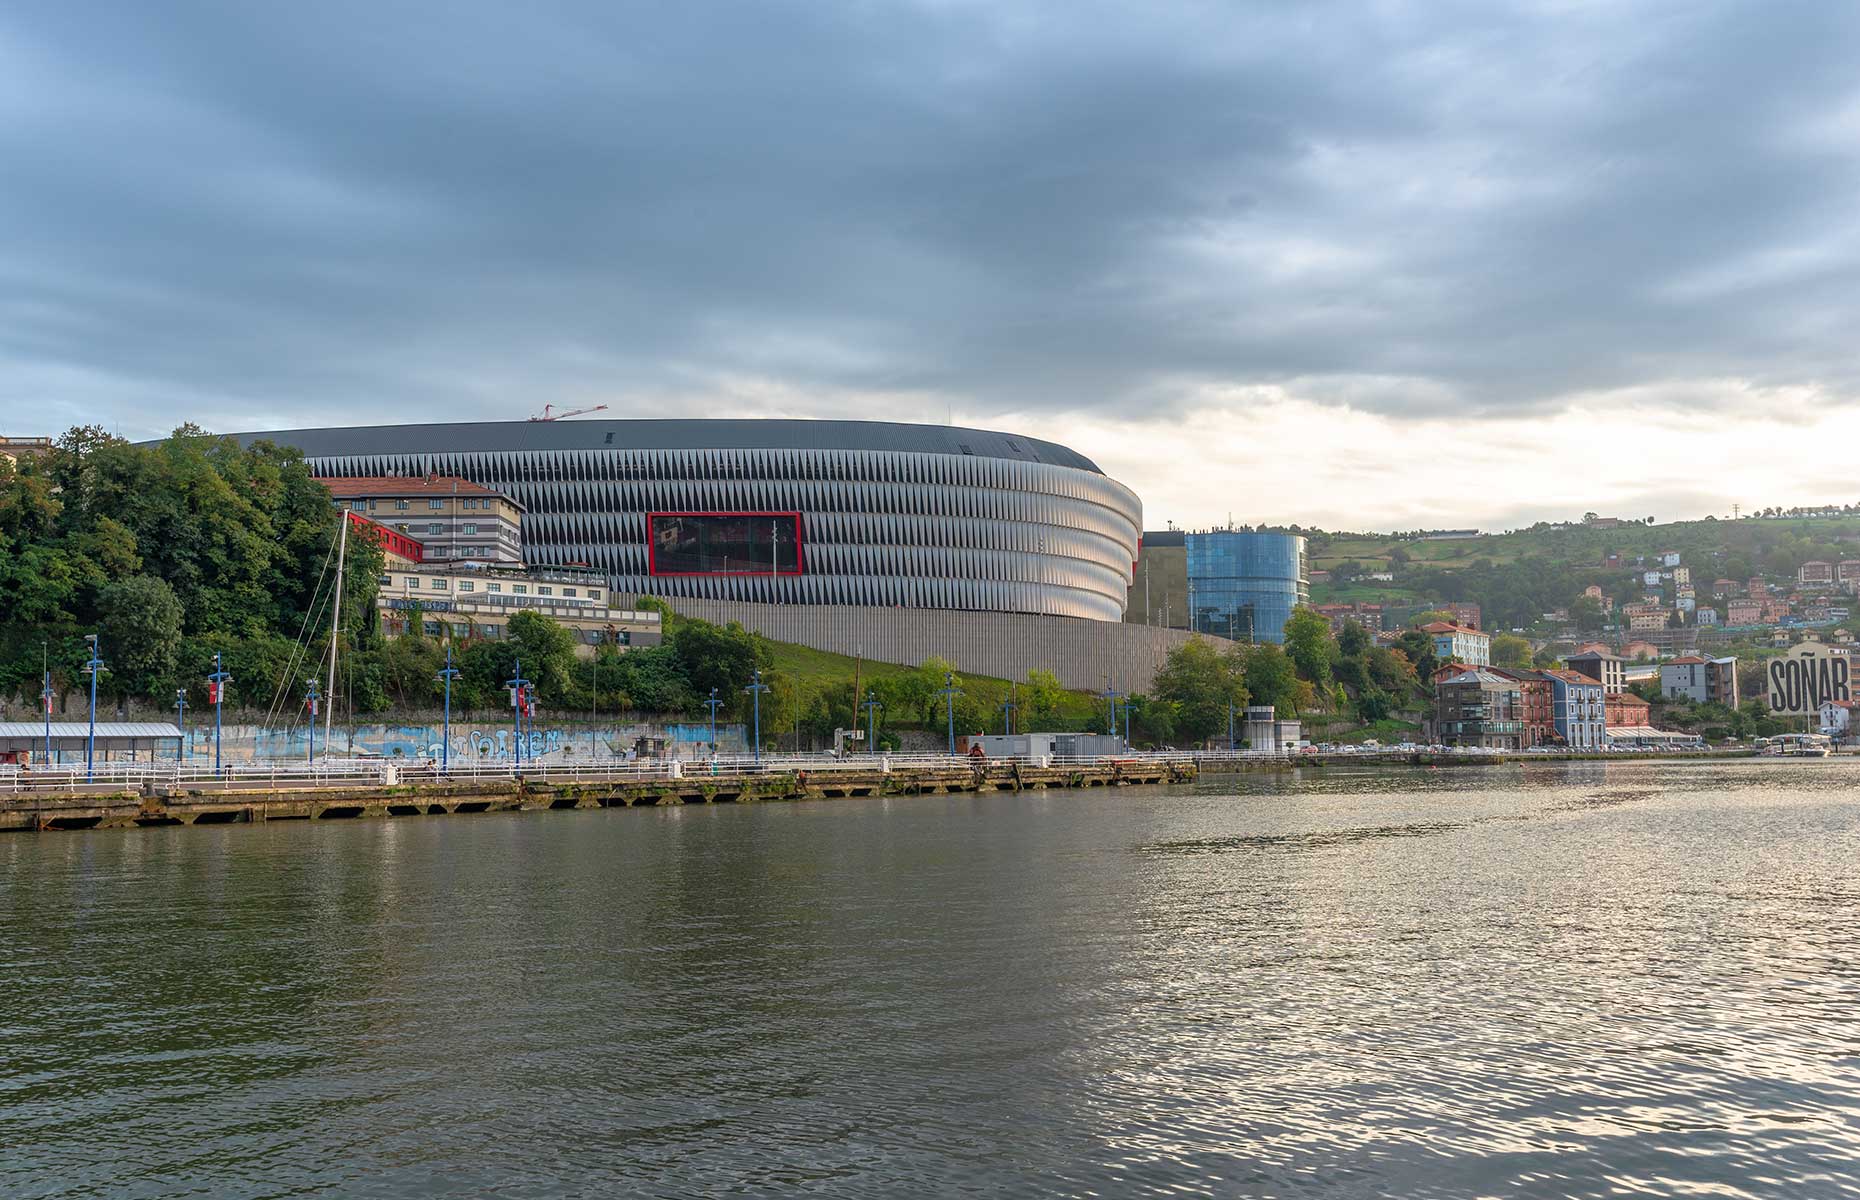 San Mames Stadium, Bilbao (Image: Forsberg/Shutterstock)